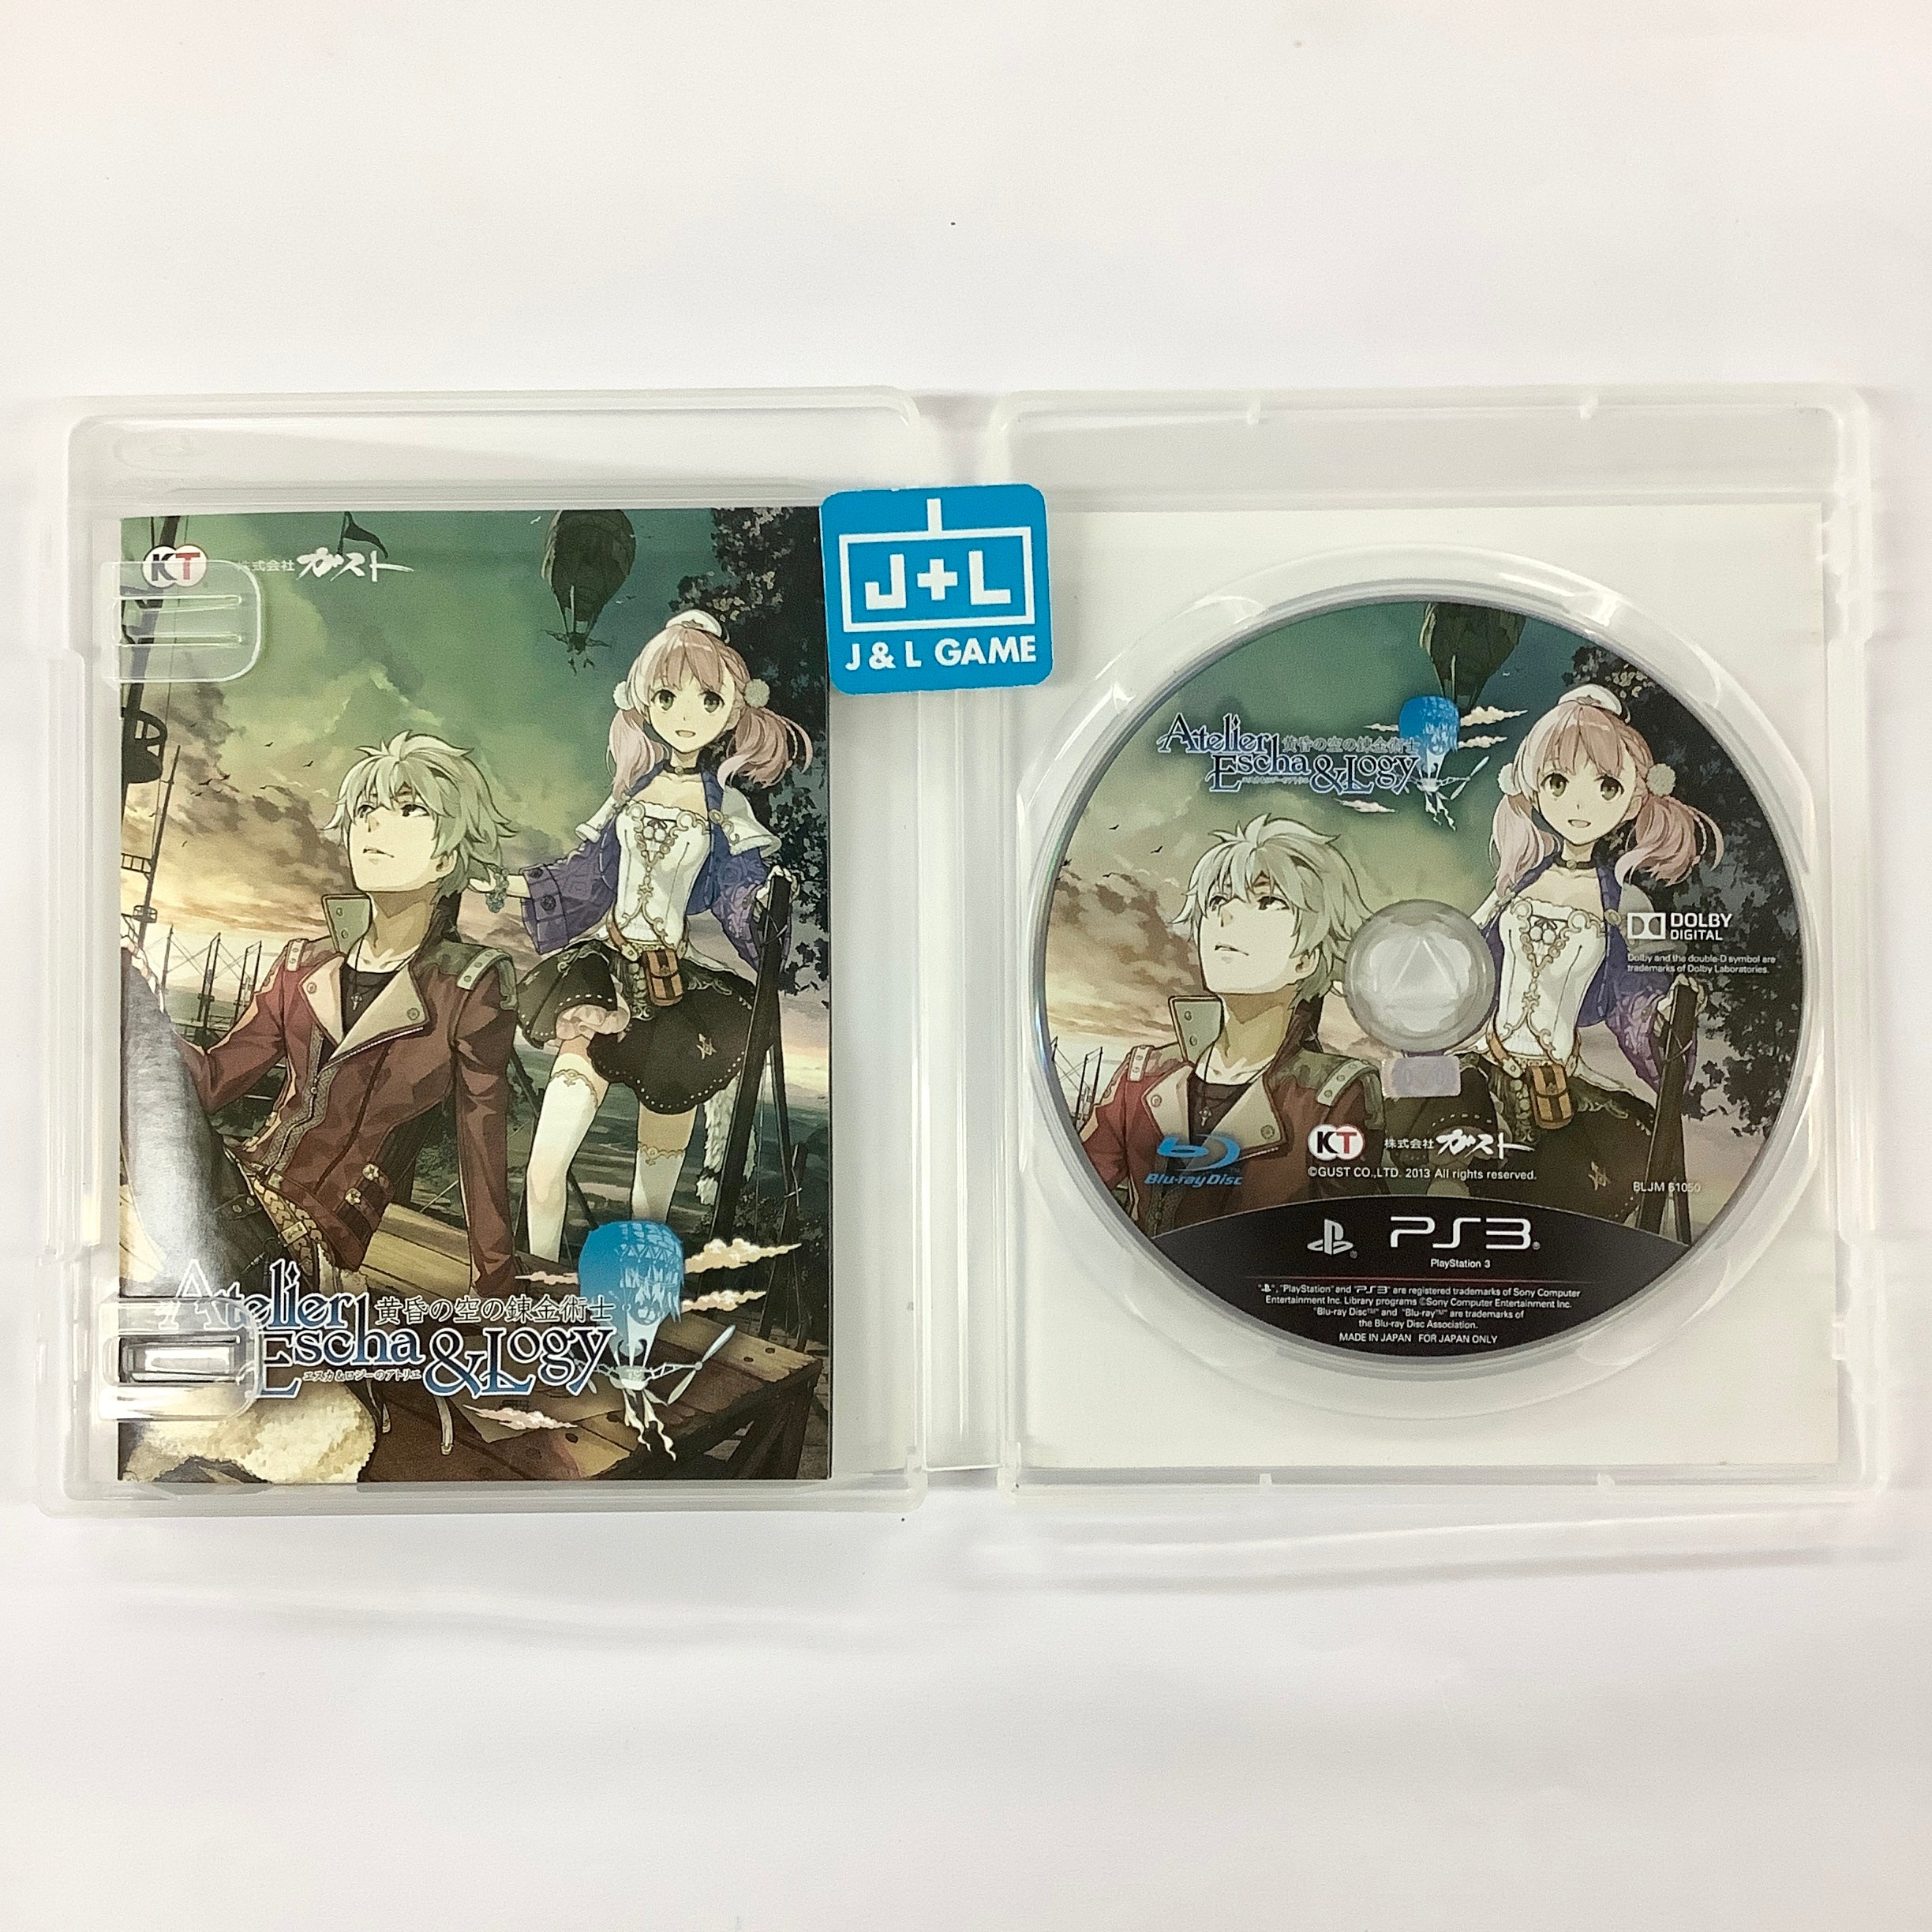 Escha & Logy no Atelier: Tasogare no Sora no Renkinjutsushi - (PS3) PlayStation 3 [Pre-Owned] (Japanese Import) Video Games Gust   